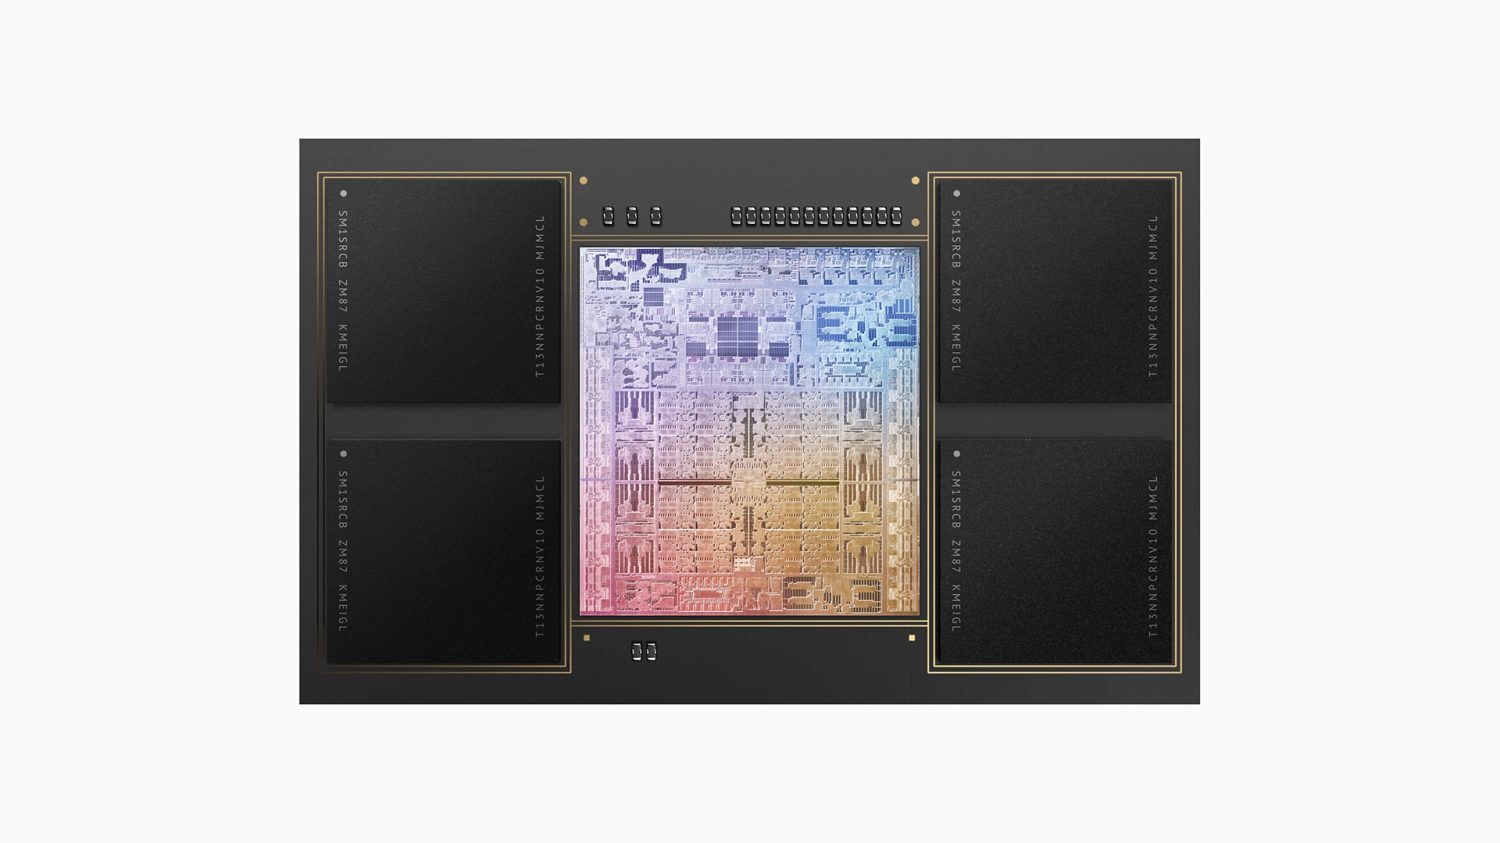   Apple M1 Max   AMD Radeon Pro  $6000  